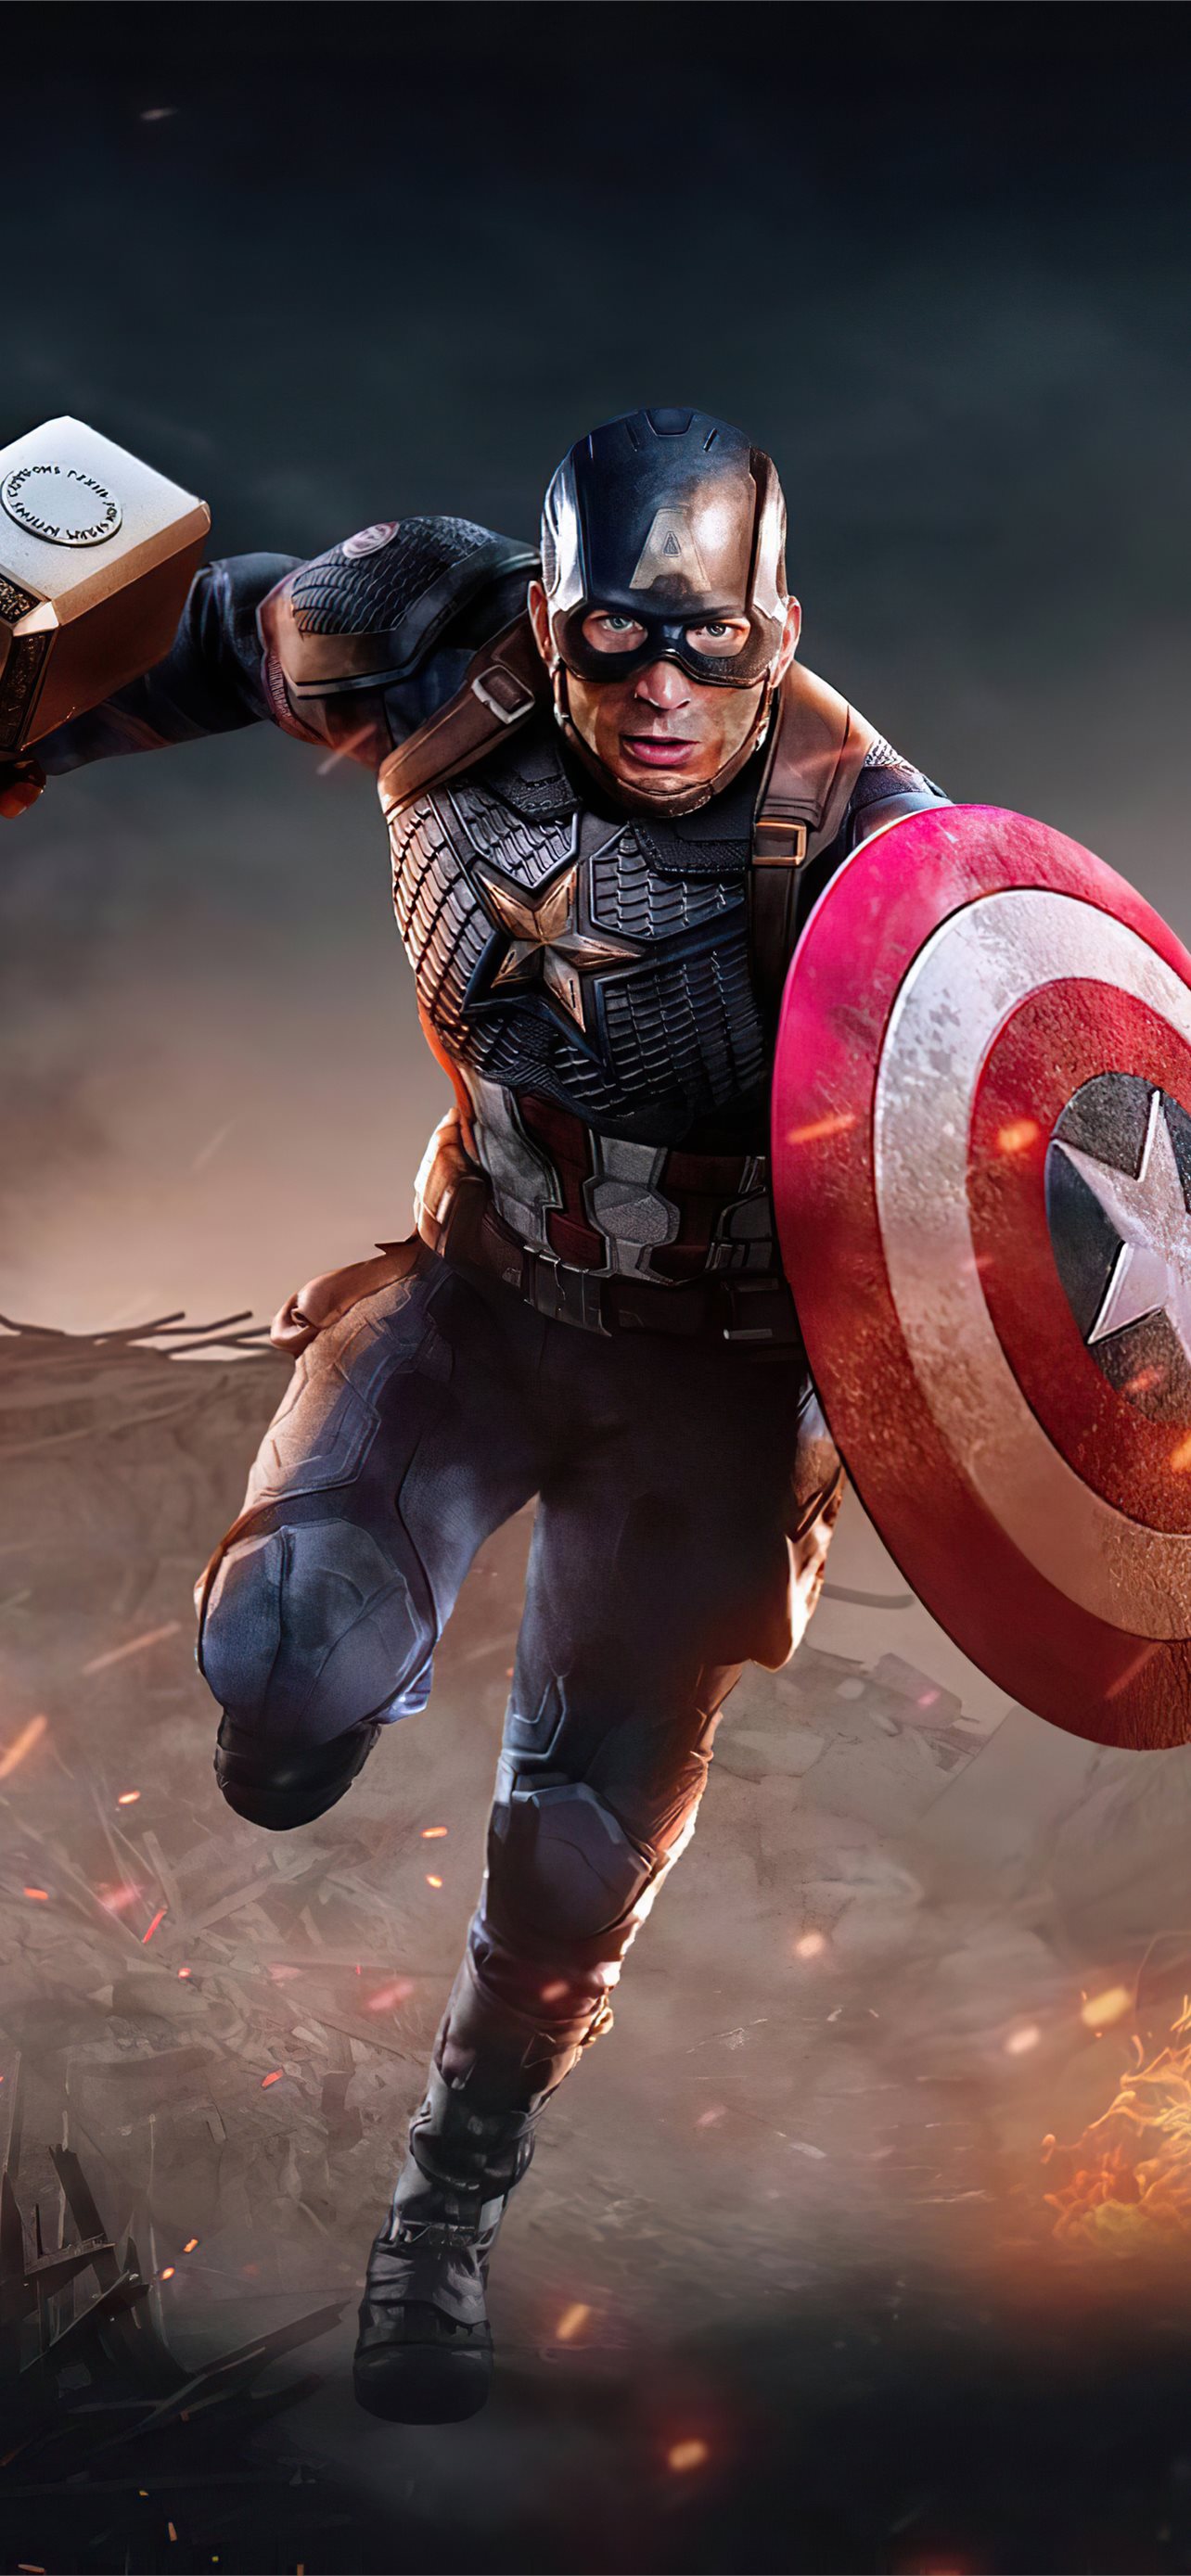 Captain America 2020 4k Samsung Galaxy Note 9 8 S9... iPhone wallpaper 